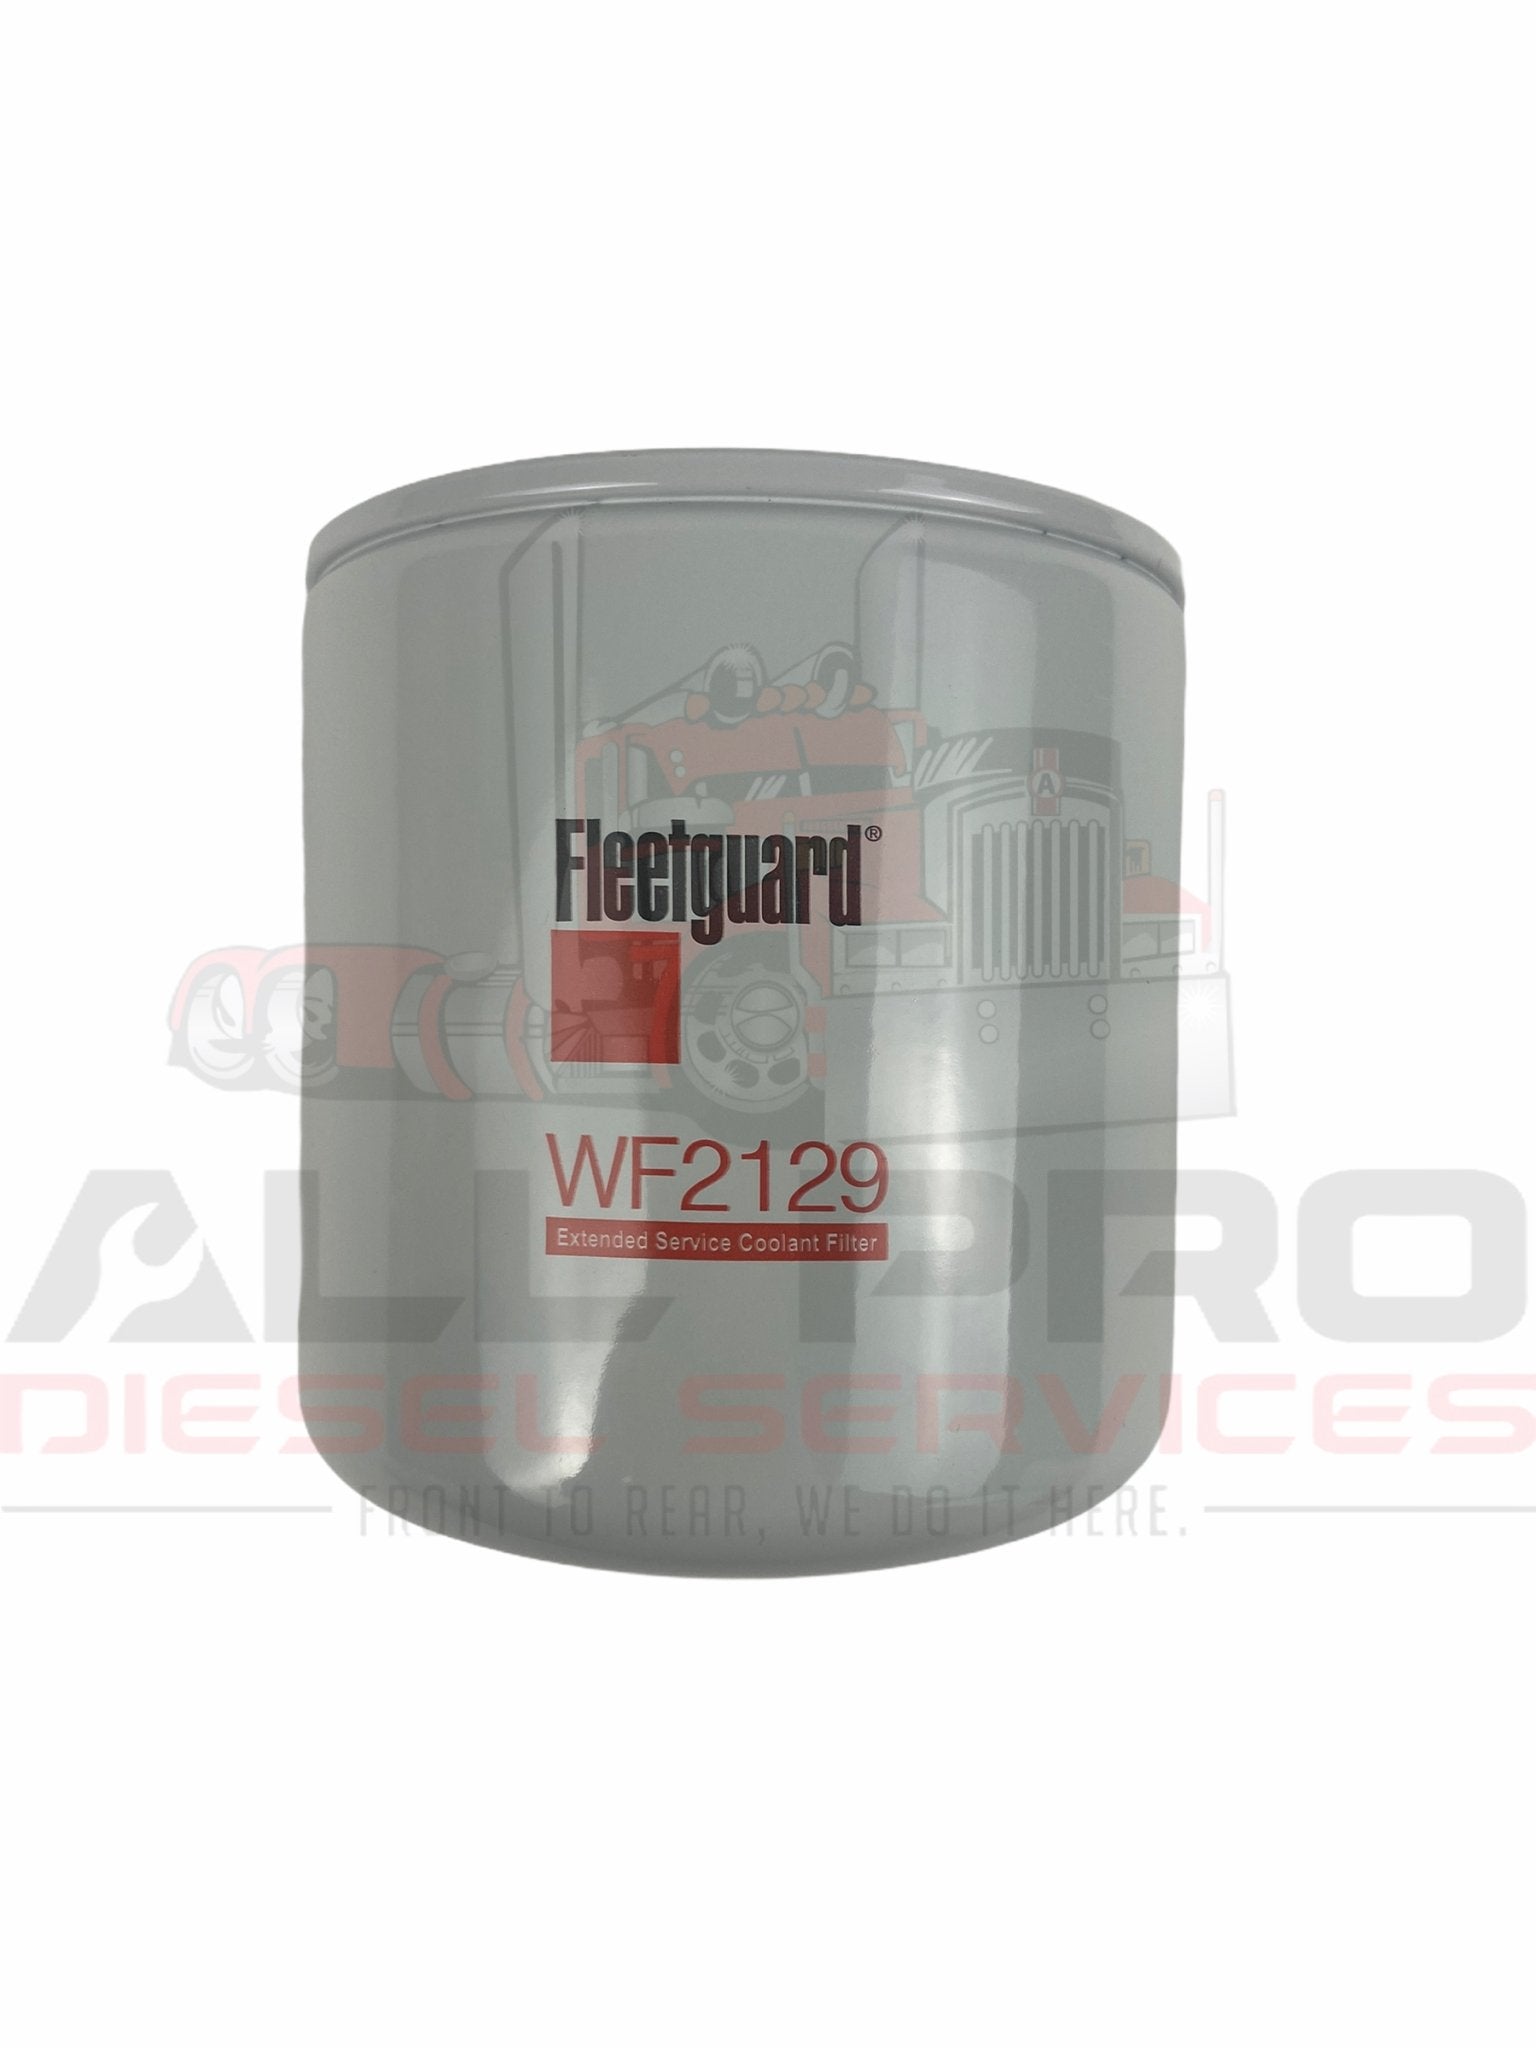 Fleetguard-WF2129